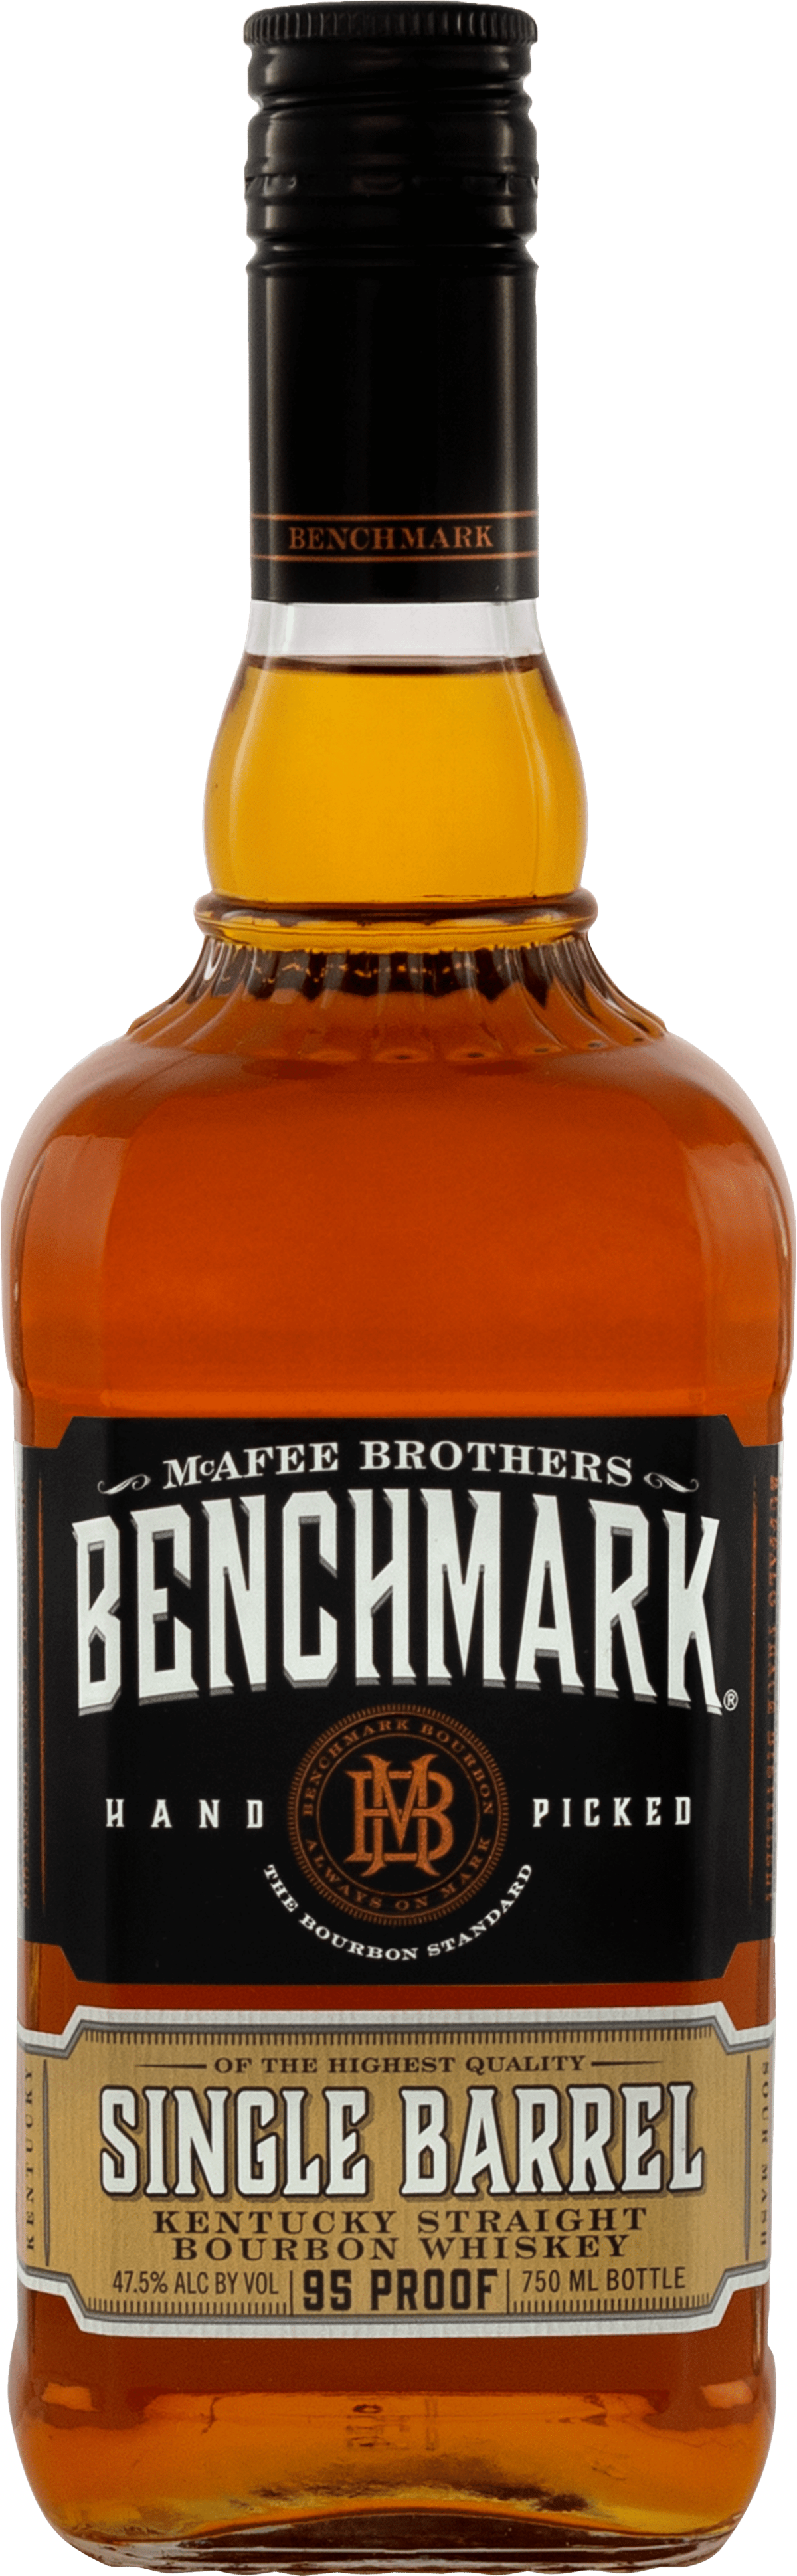 Benchmark Single Barrel Bourbon Whiskey